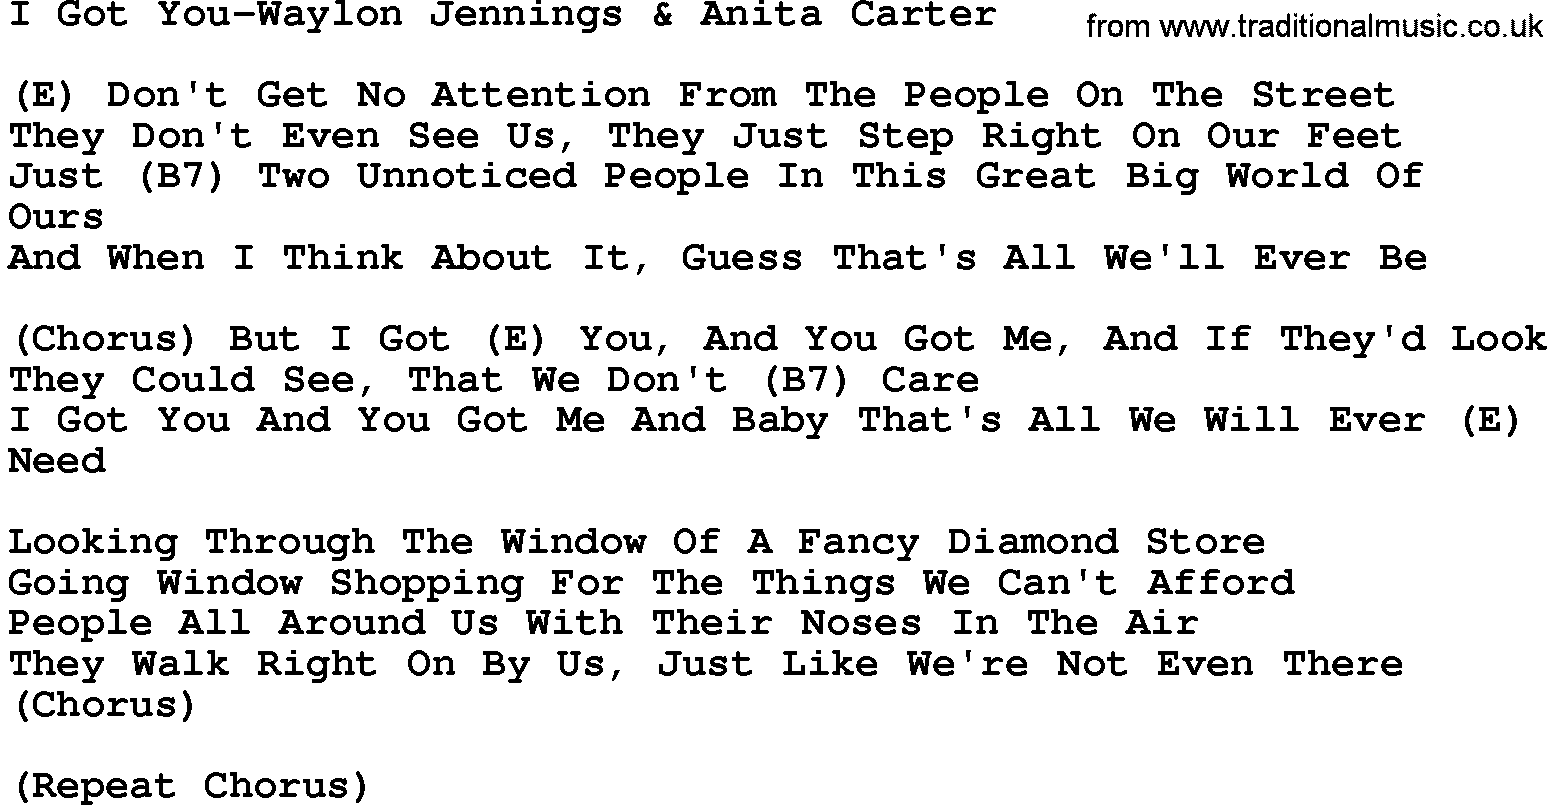 Country music song: I Got You-Waylon Jennings&Anita Carter lyrics and chords